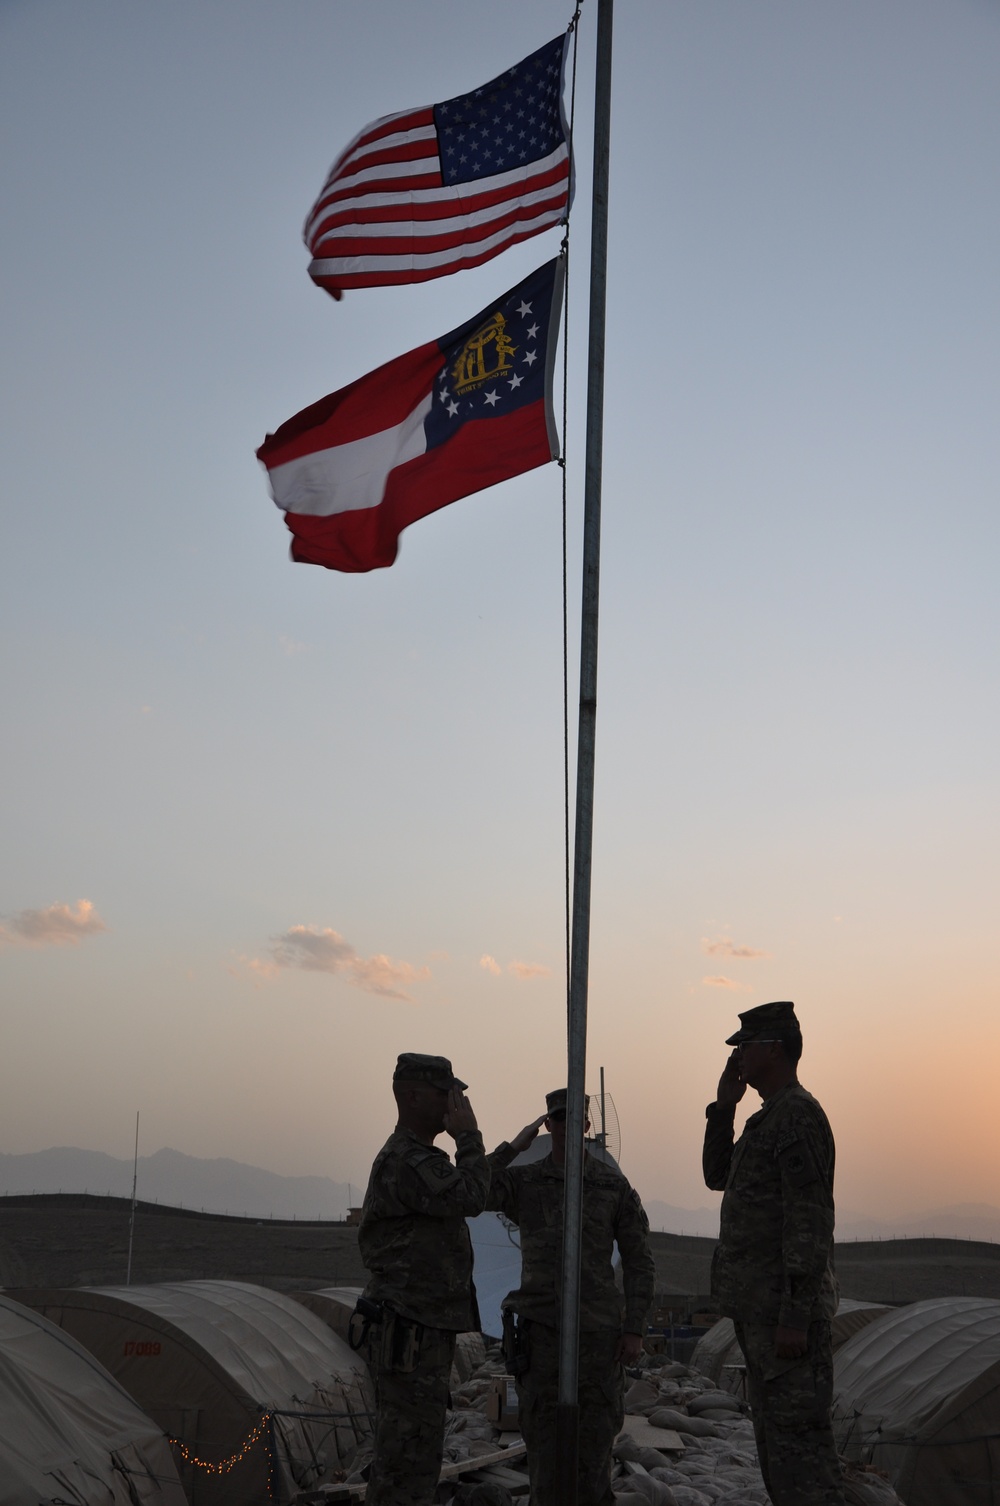 Flag ceremony at sunset